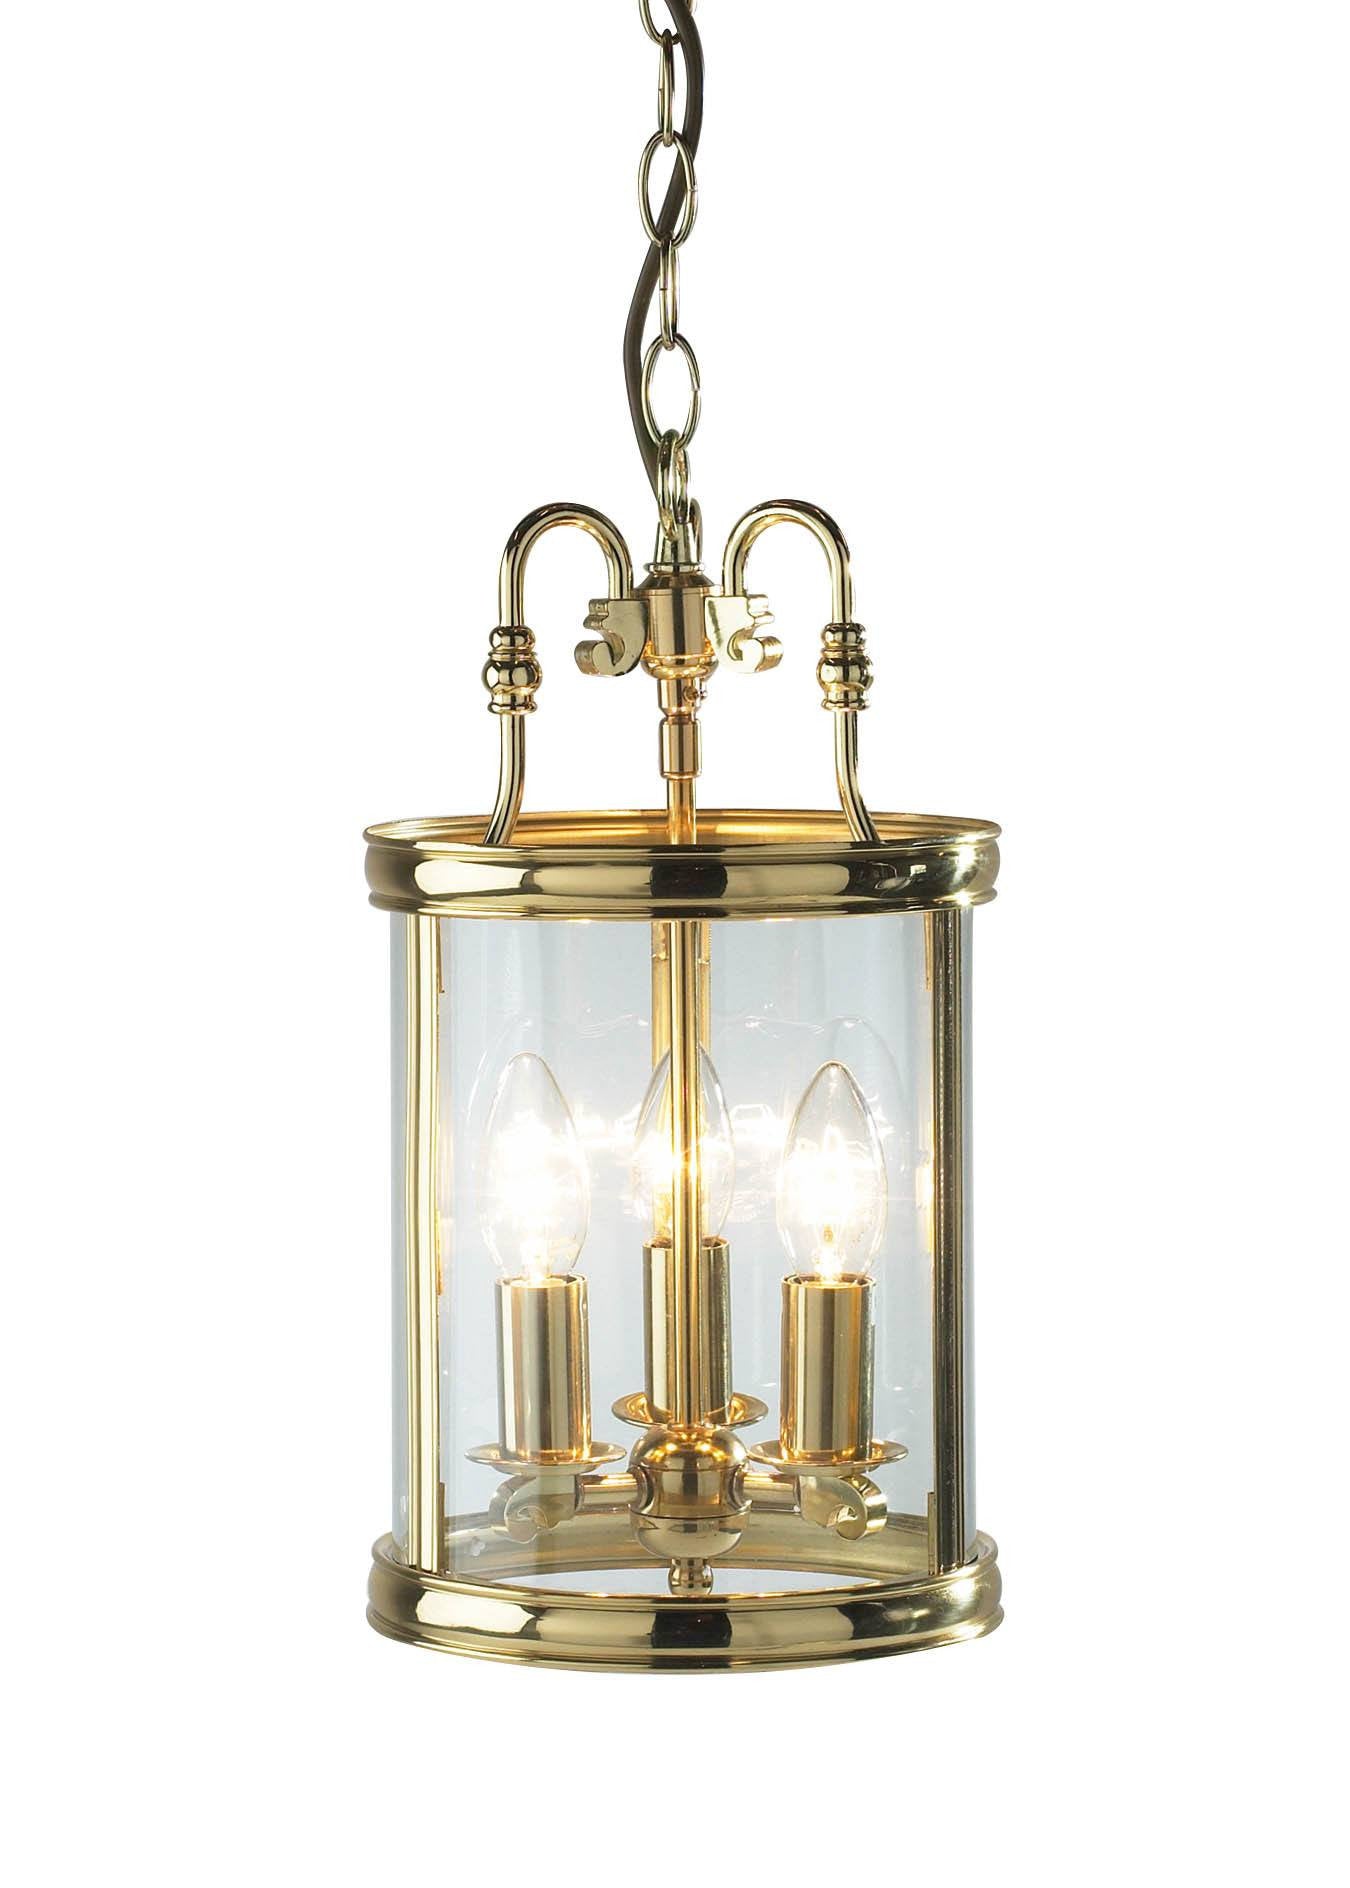 Lambeth Polished Brass Ceiling Lantern - London Lighting - 1